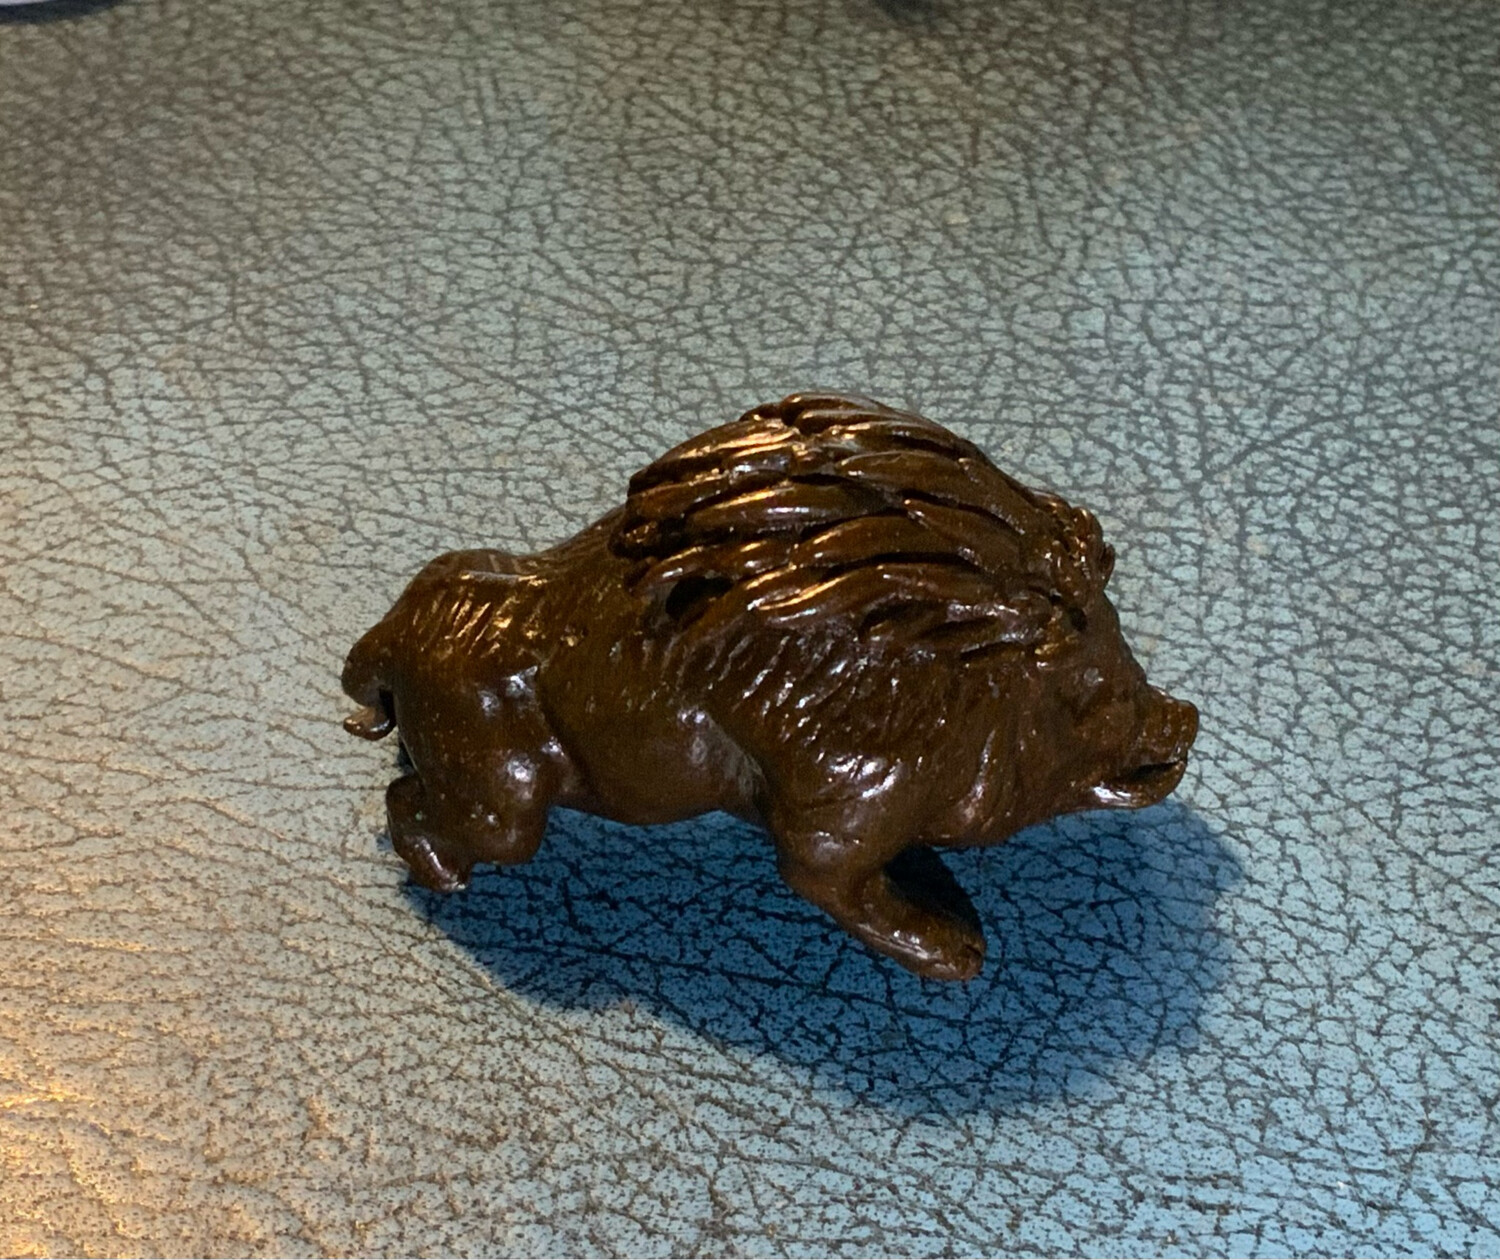 Japanese Solid Bronze Warthog Figurine - Stunning Quality